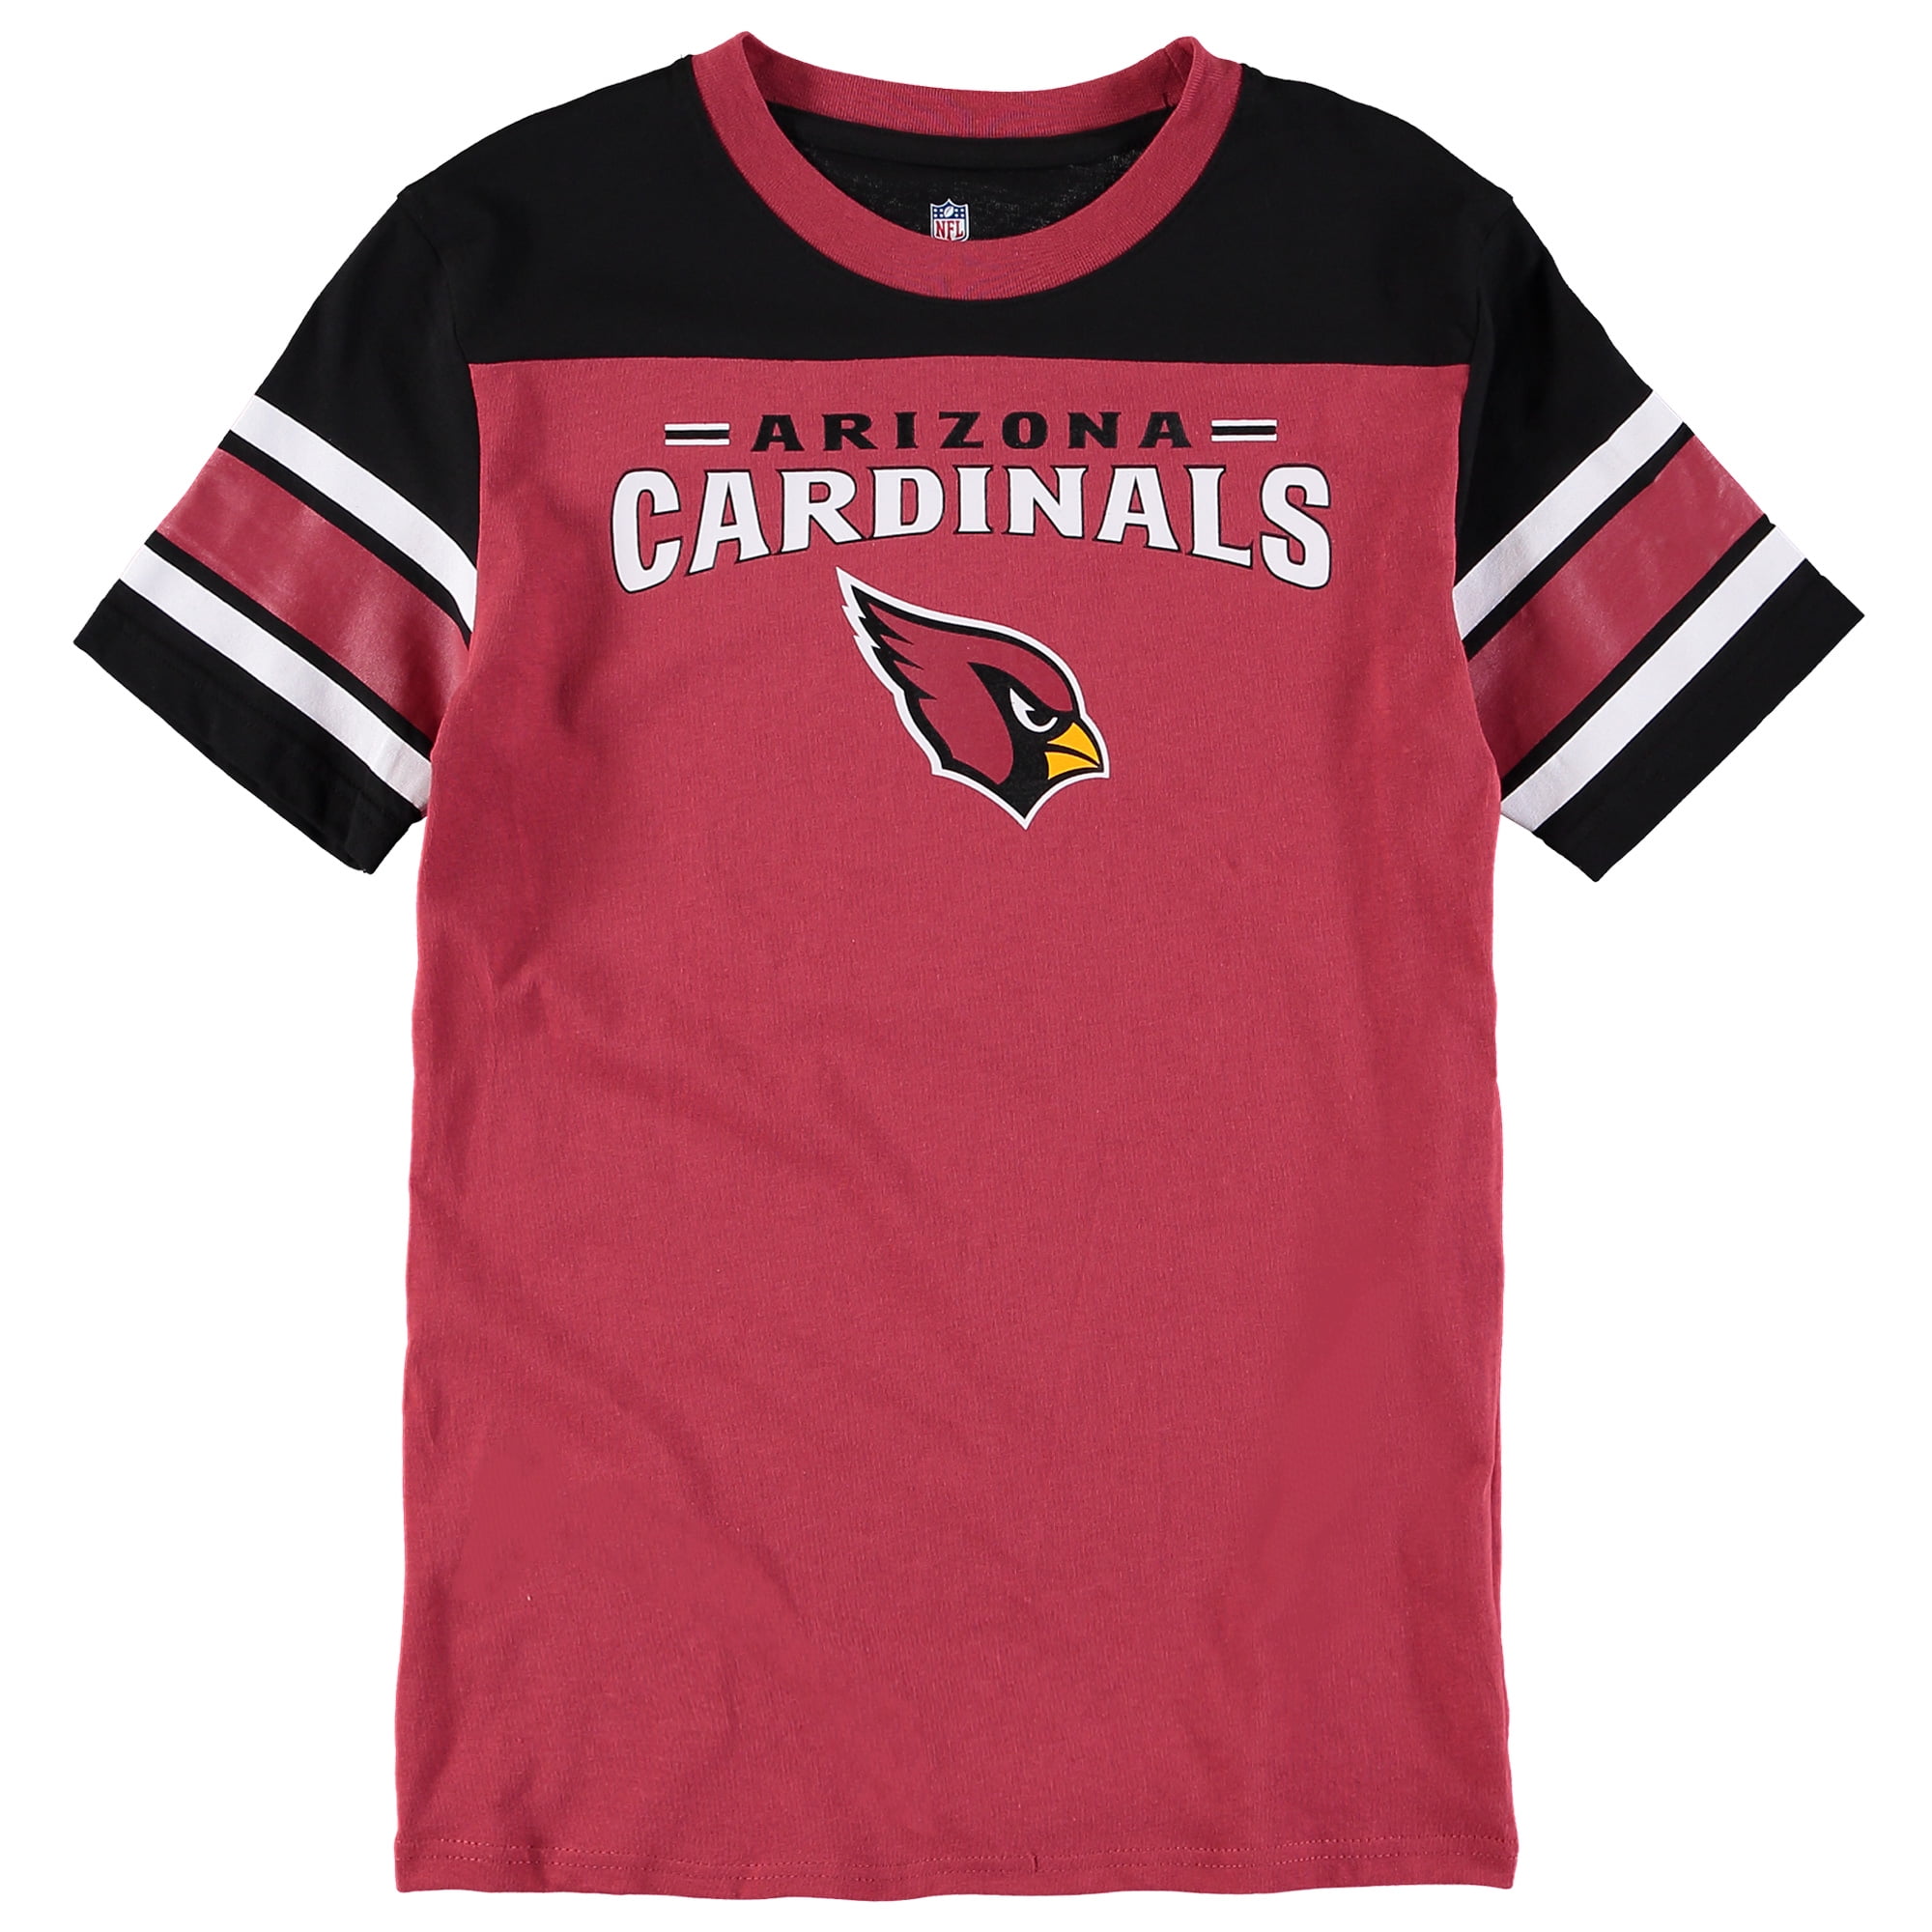 az cardinals pink jersey